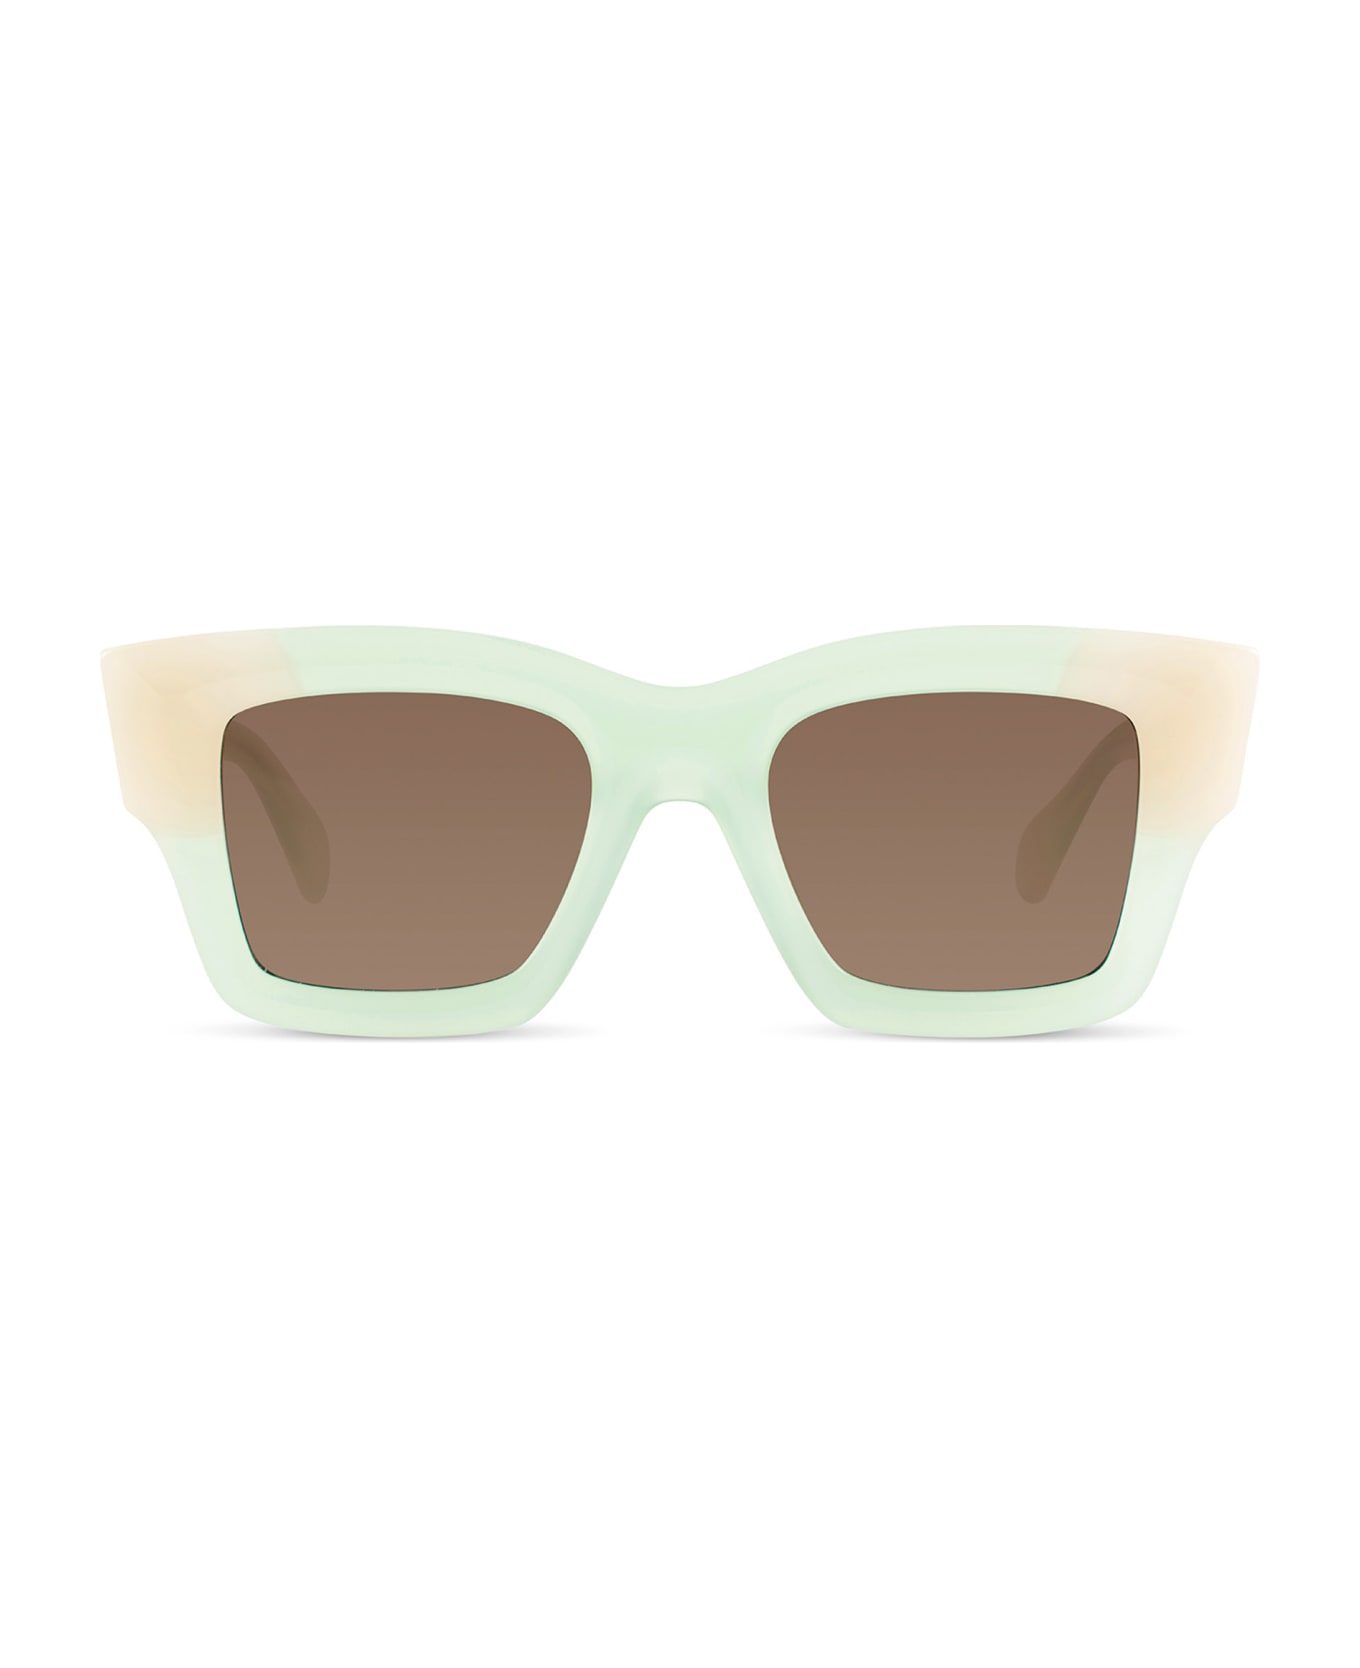 Jacquemus Les Lunettes Baci - Light Green Sunglasses - green